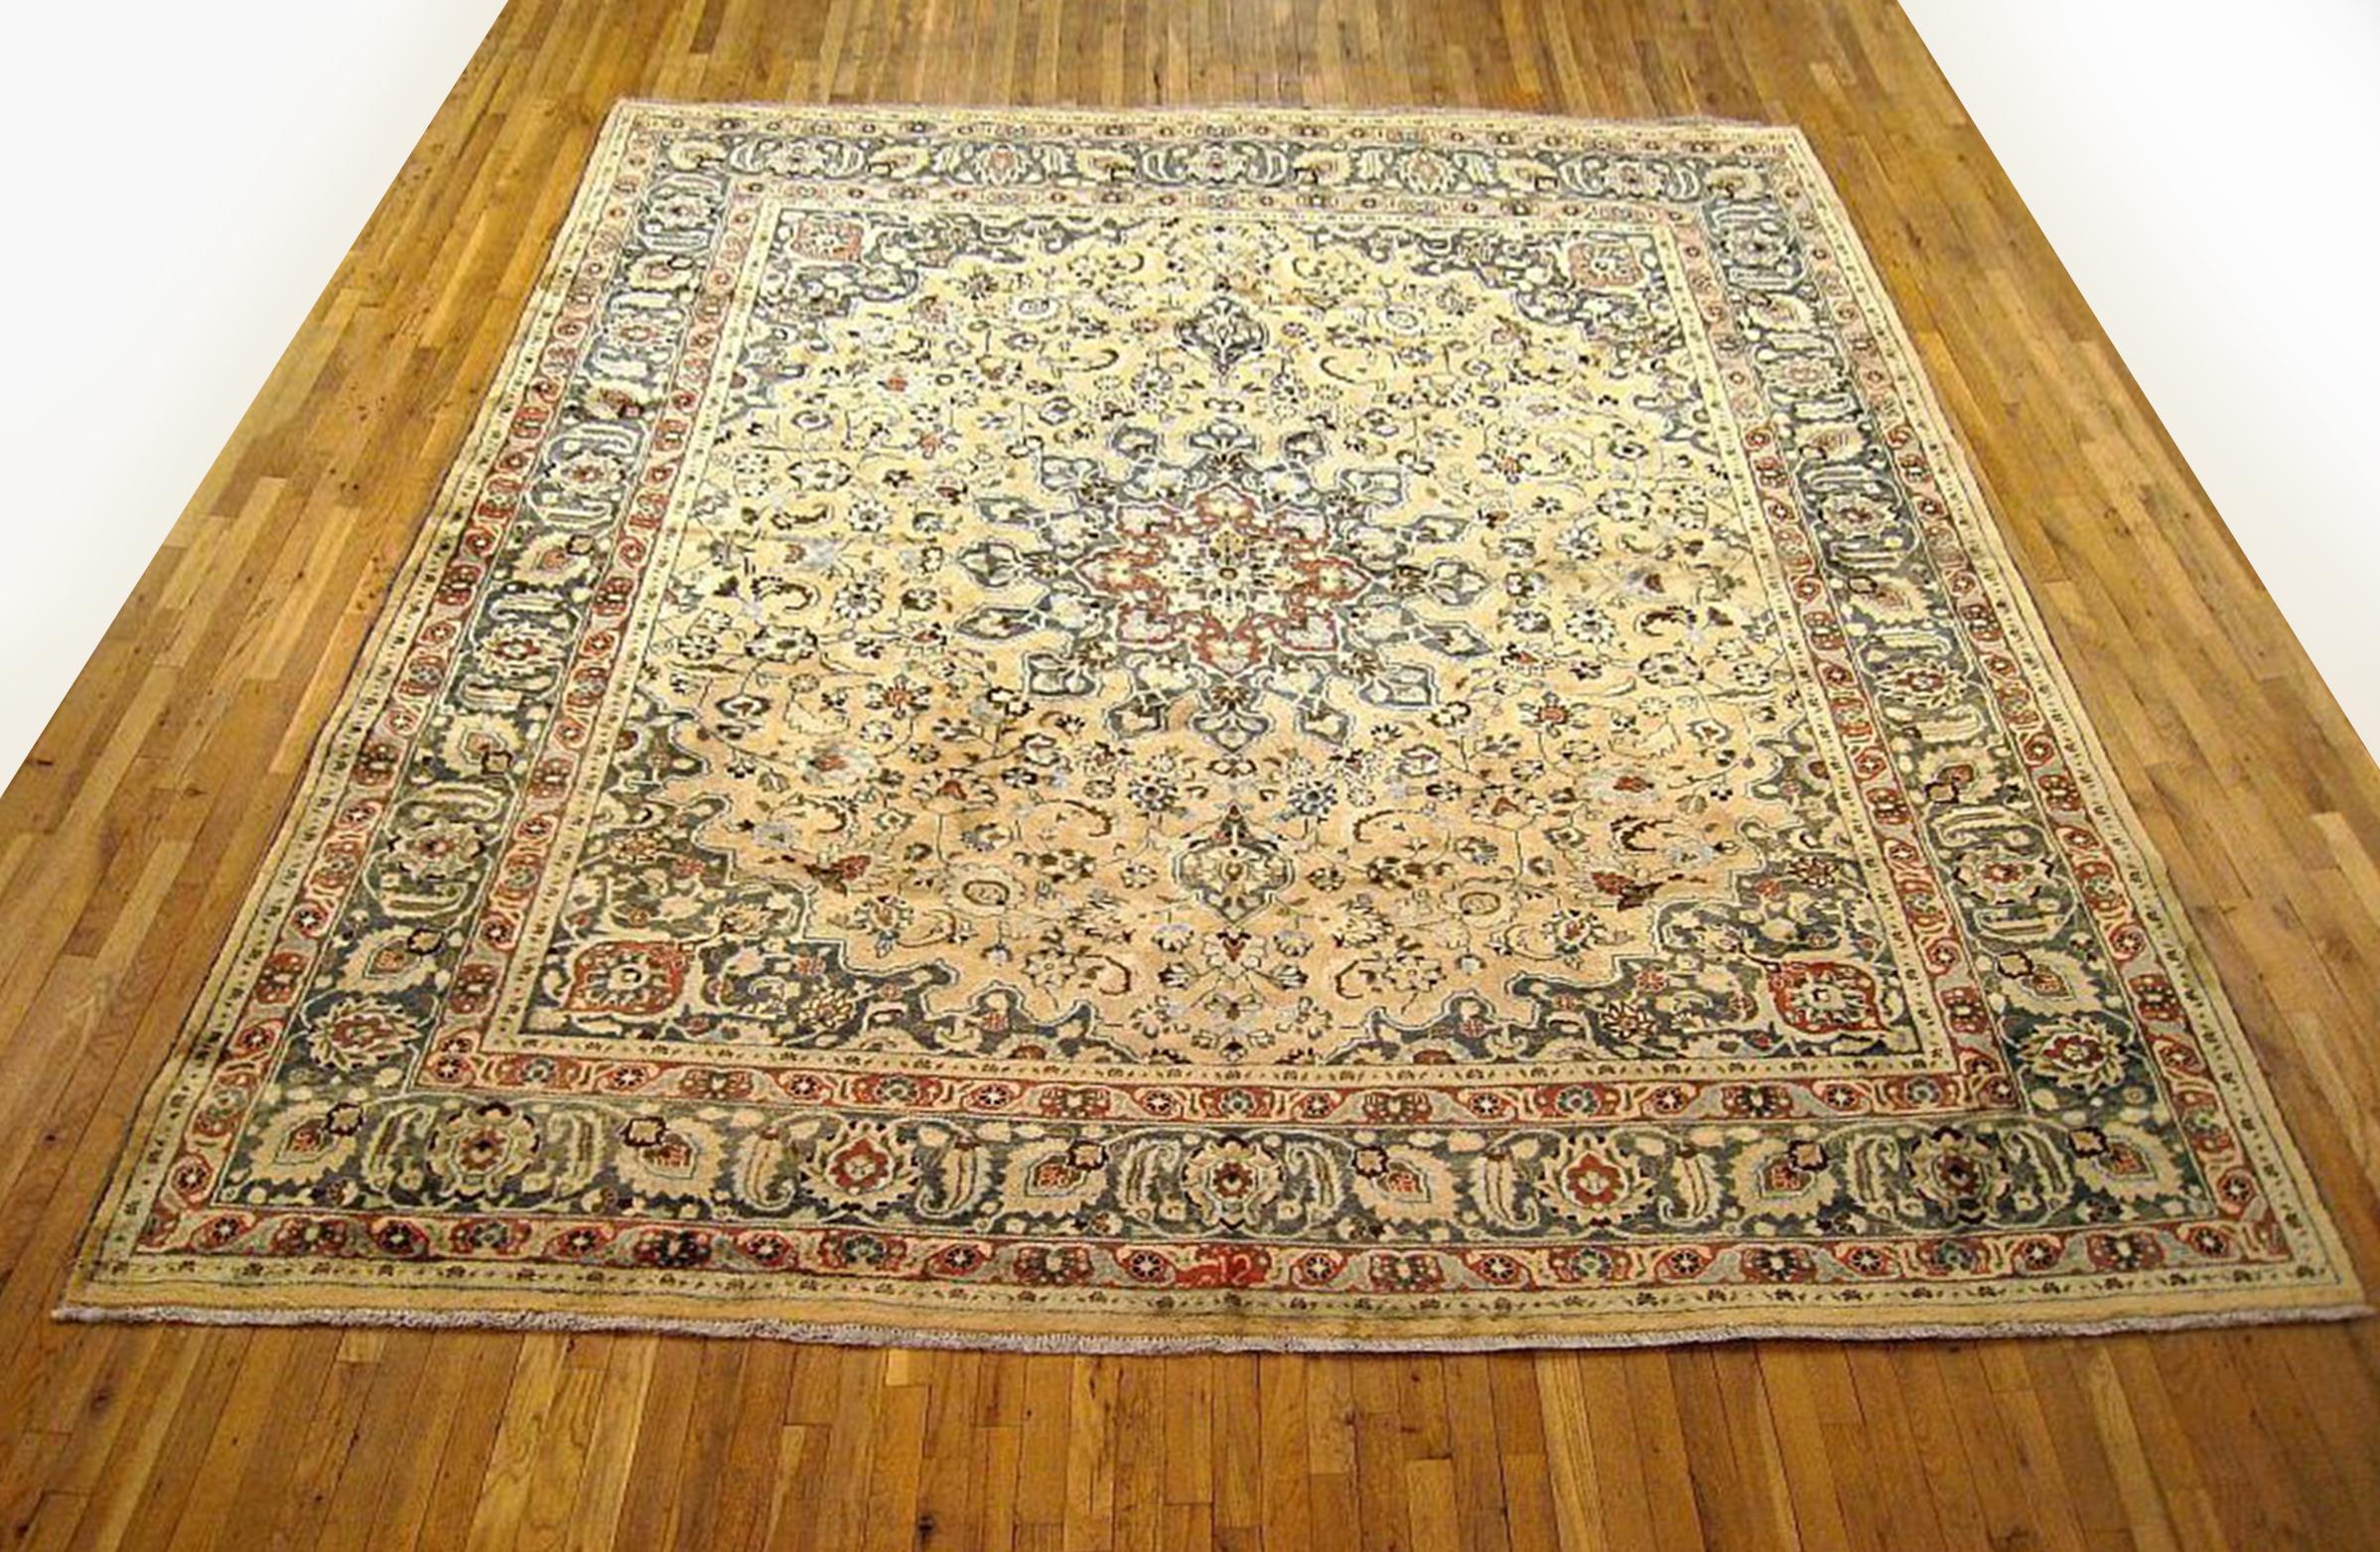 Vintage Persian Meshed Oriental rug, Room size

A vintage Persian Meshed oriental rug, size 11'5